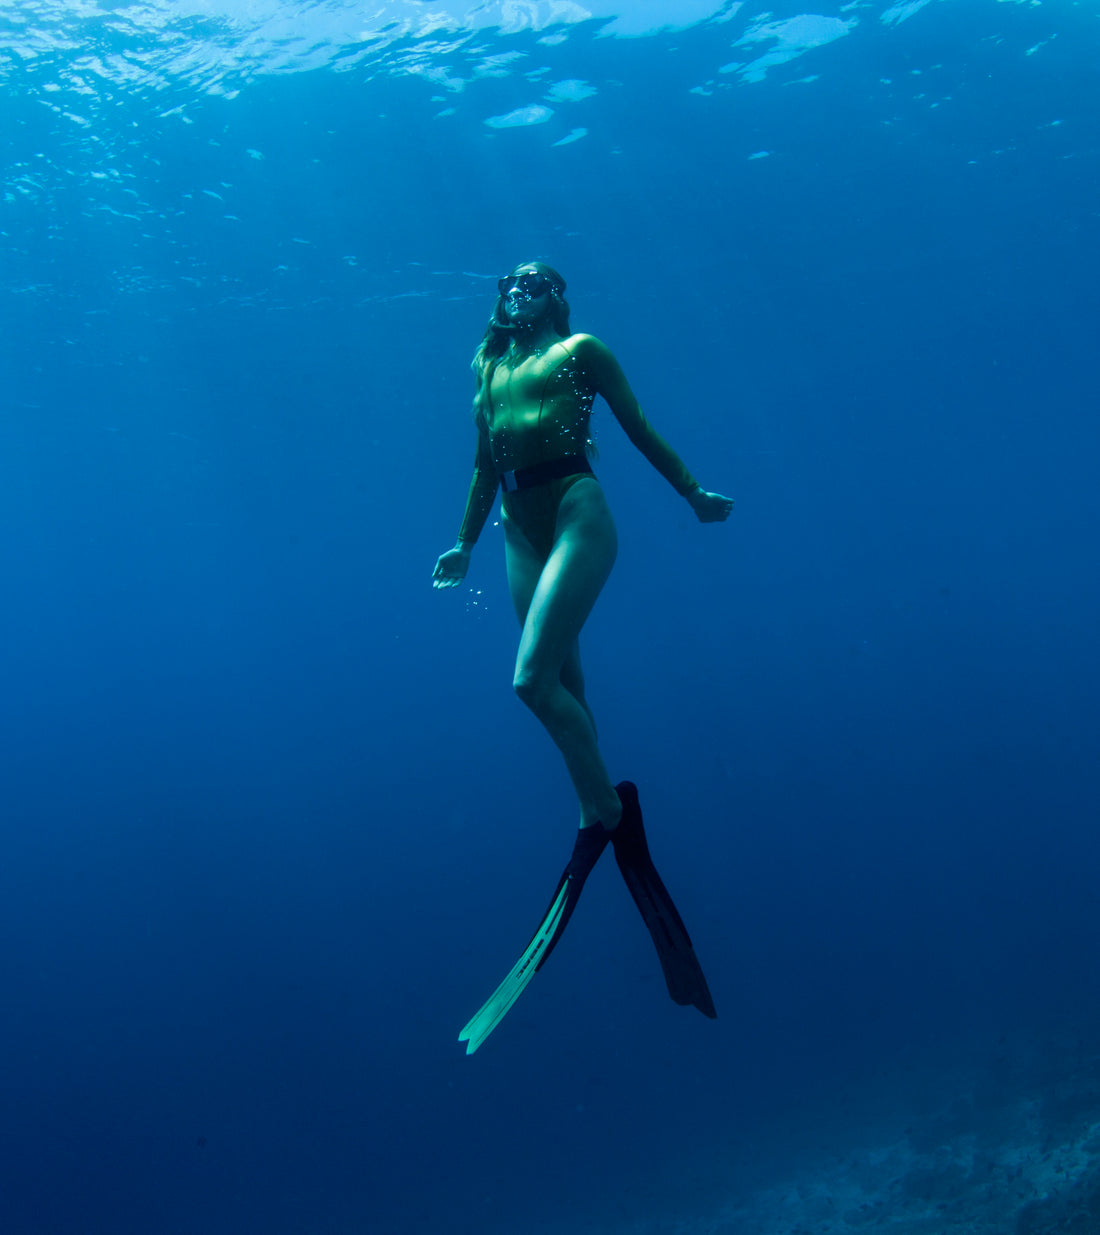 Sierra Quitiquit free diving swimming underwater